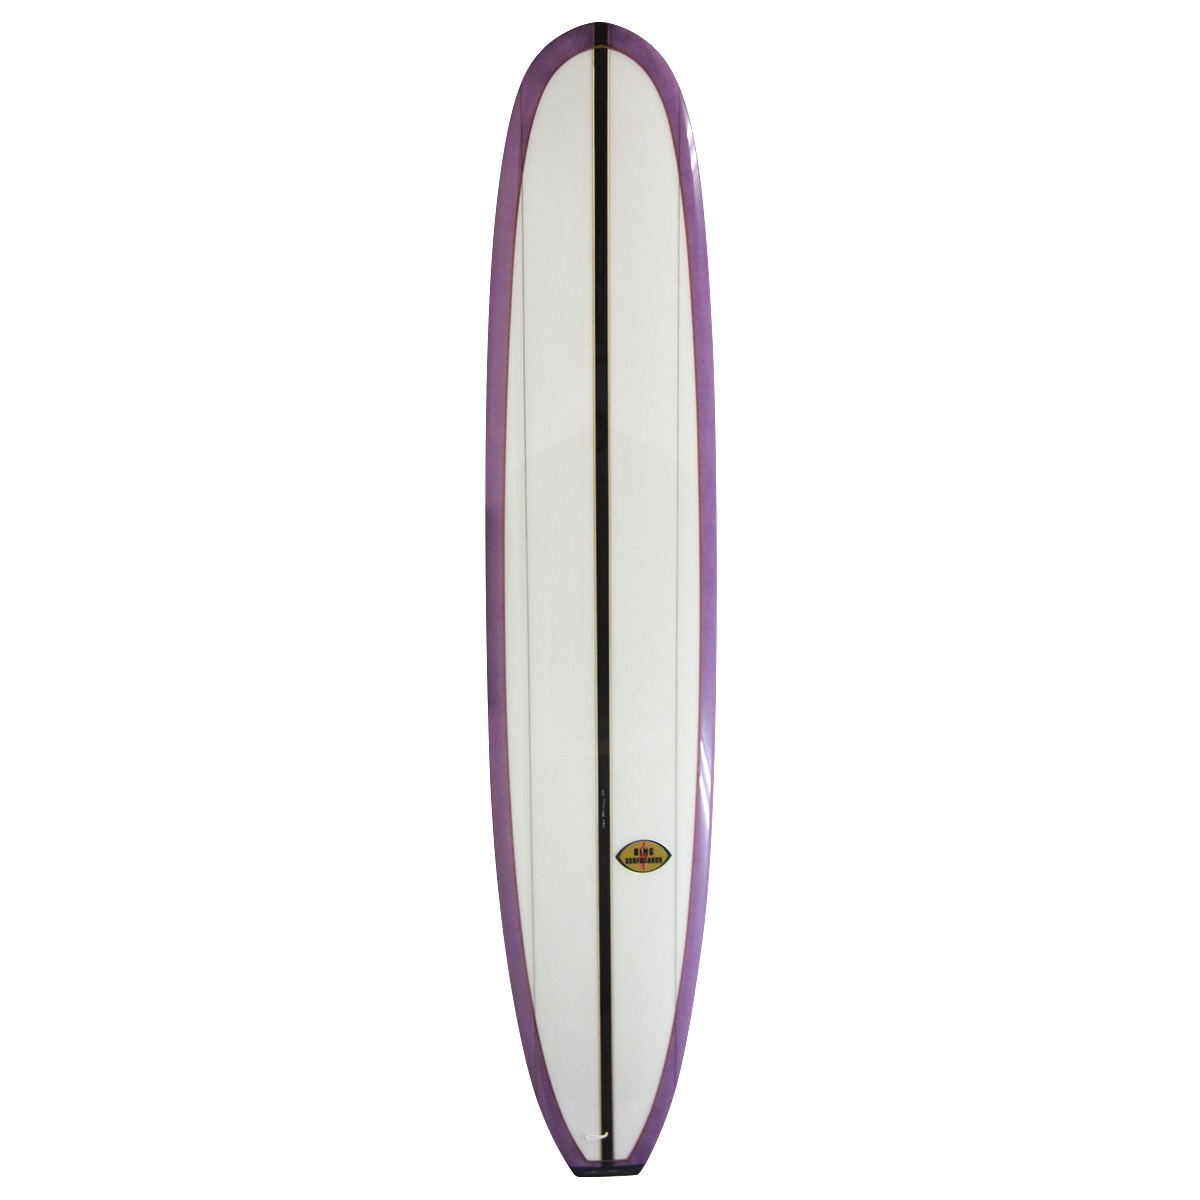 BING SURFBOARDS : James Parry Model